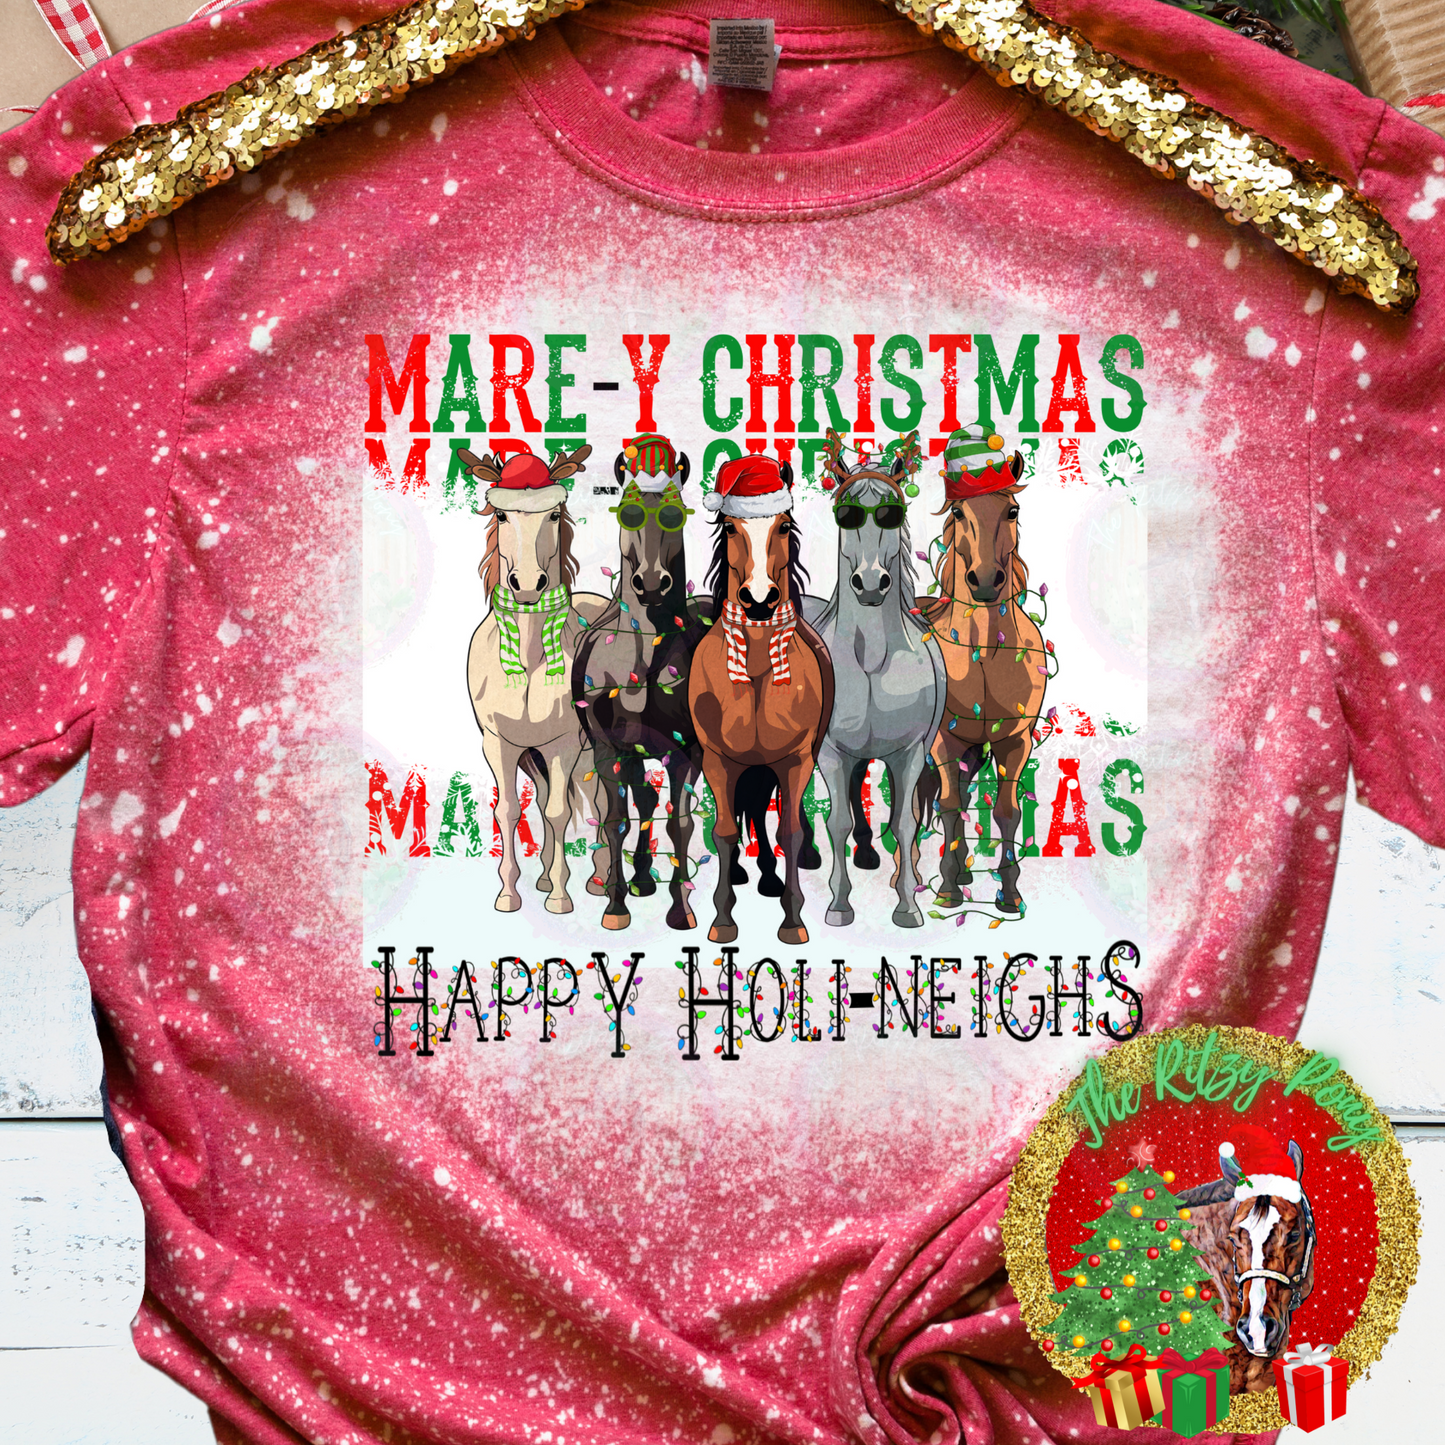 Mare-Y Christmas & Happy Holi-Neighs Shirt